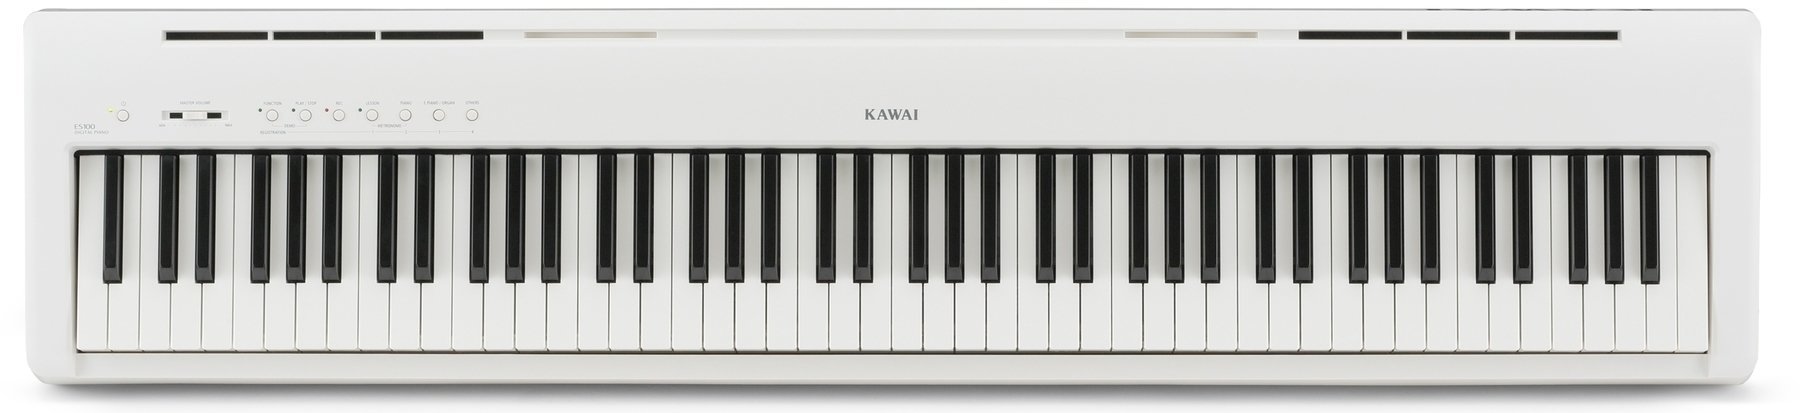 Digital Stage Piano Kawai ES100W Portable Digital Piano